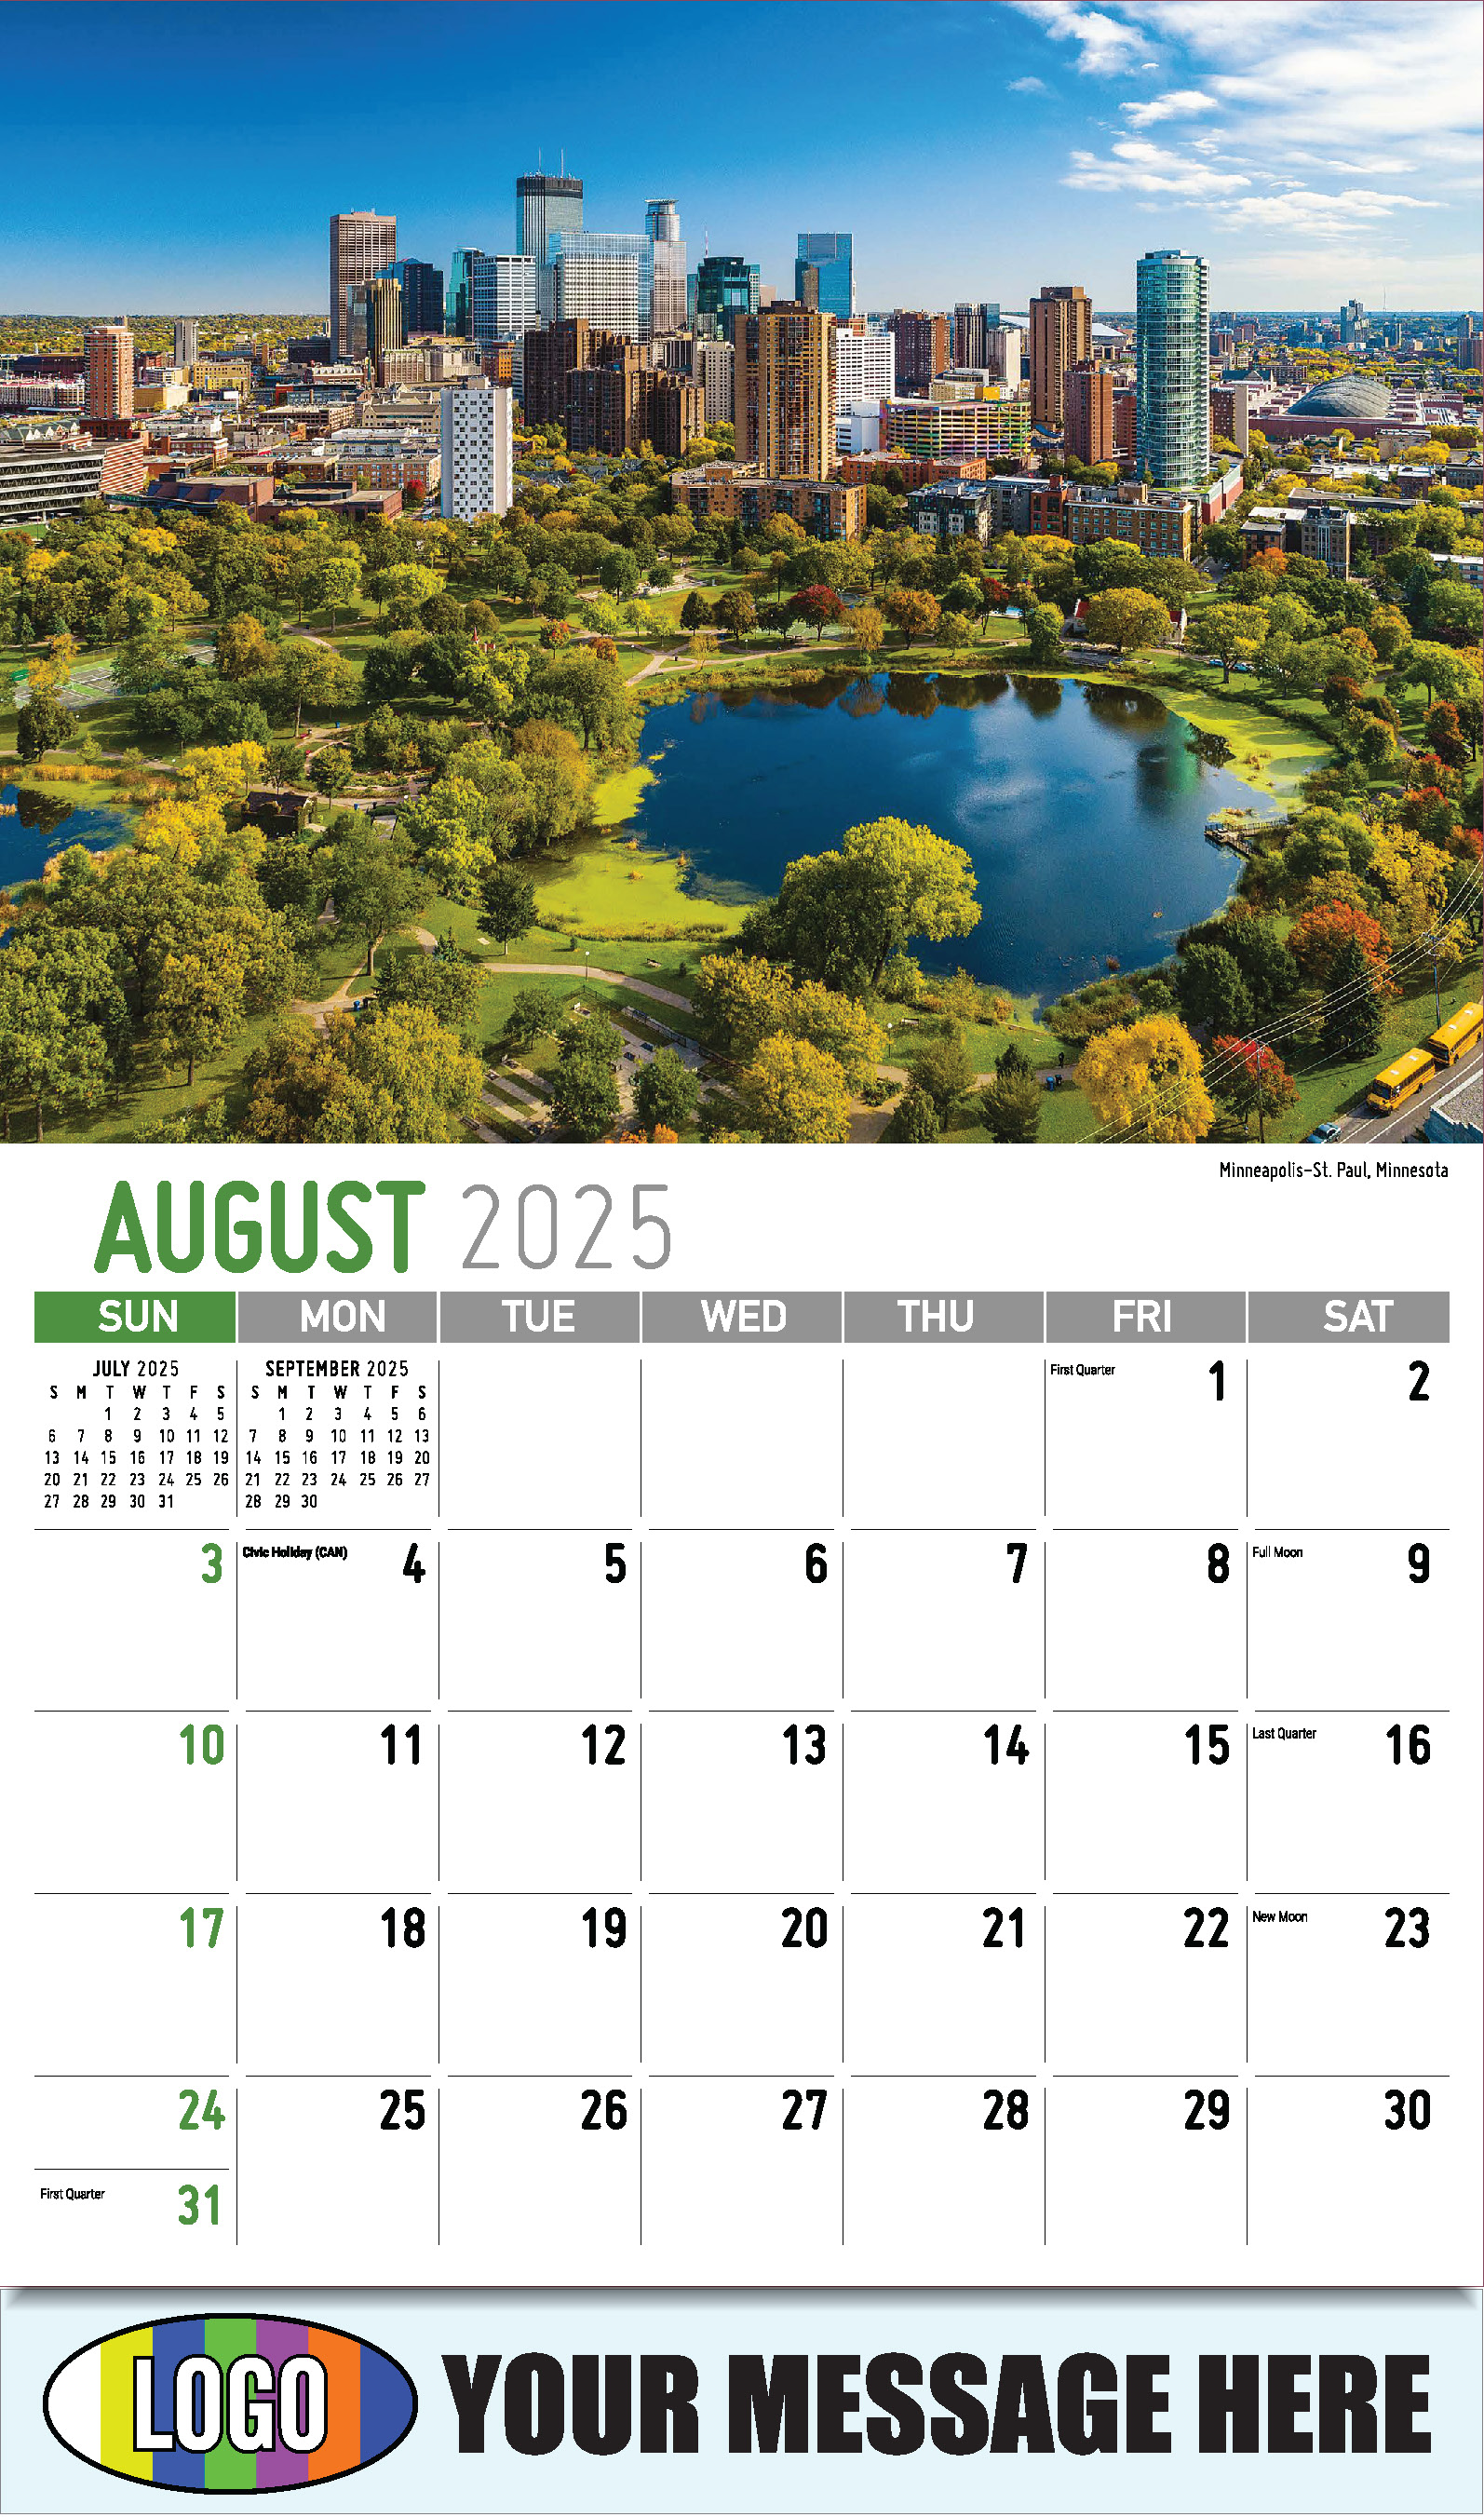 Scenes of America 2025 Business Advertising Wall Calendar - August